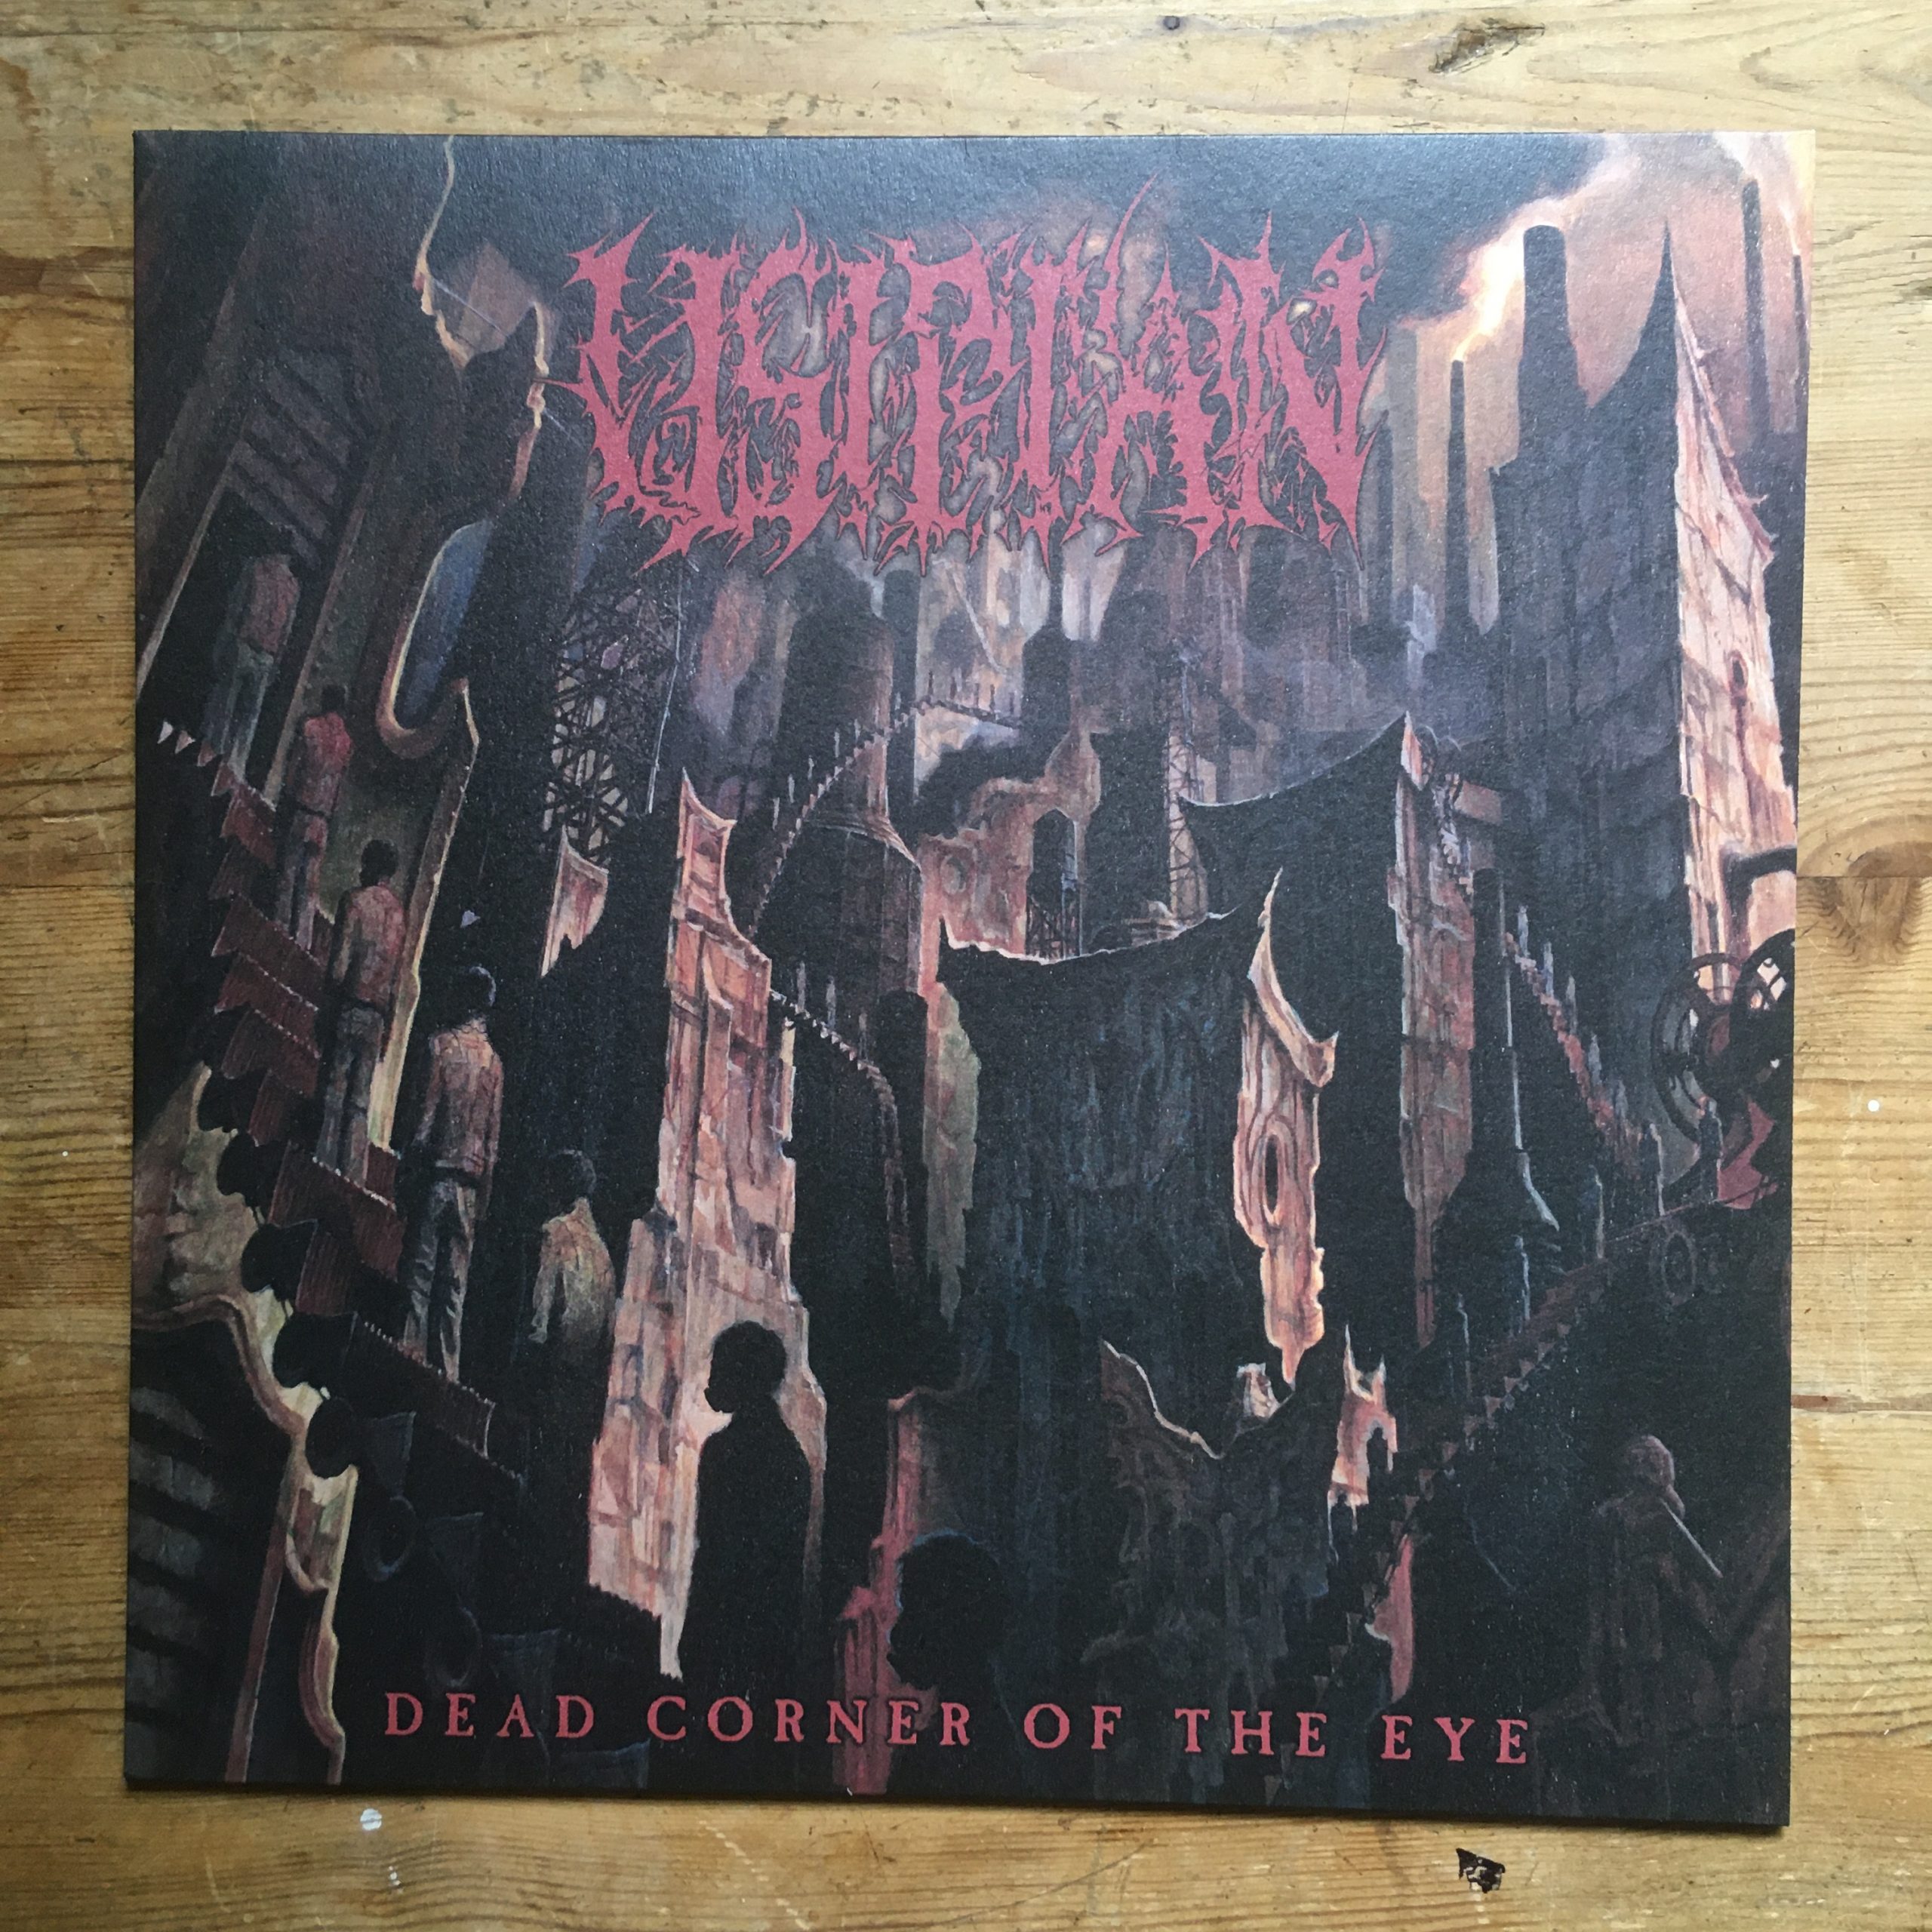 Photo of the Usipian - "Dead Corner of the Eye" LP (Black vinyl)